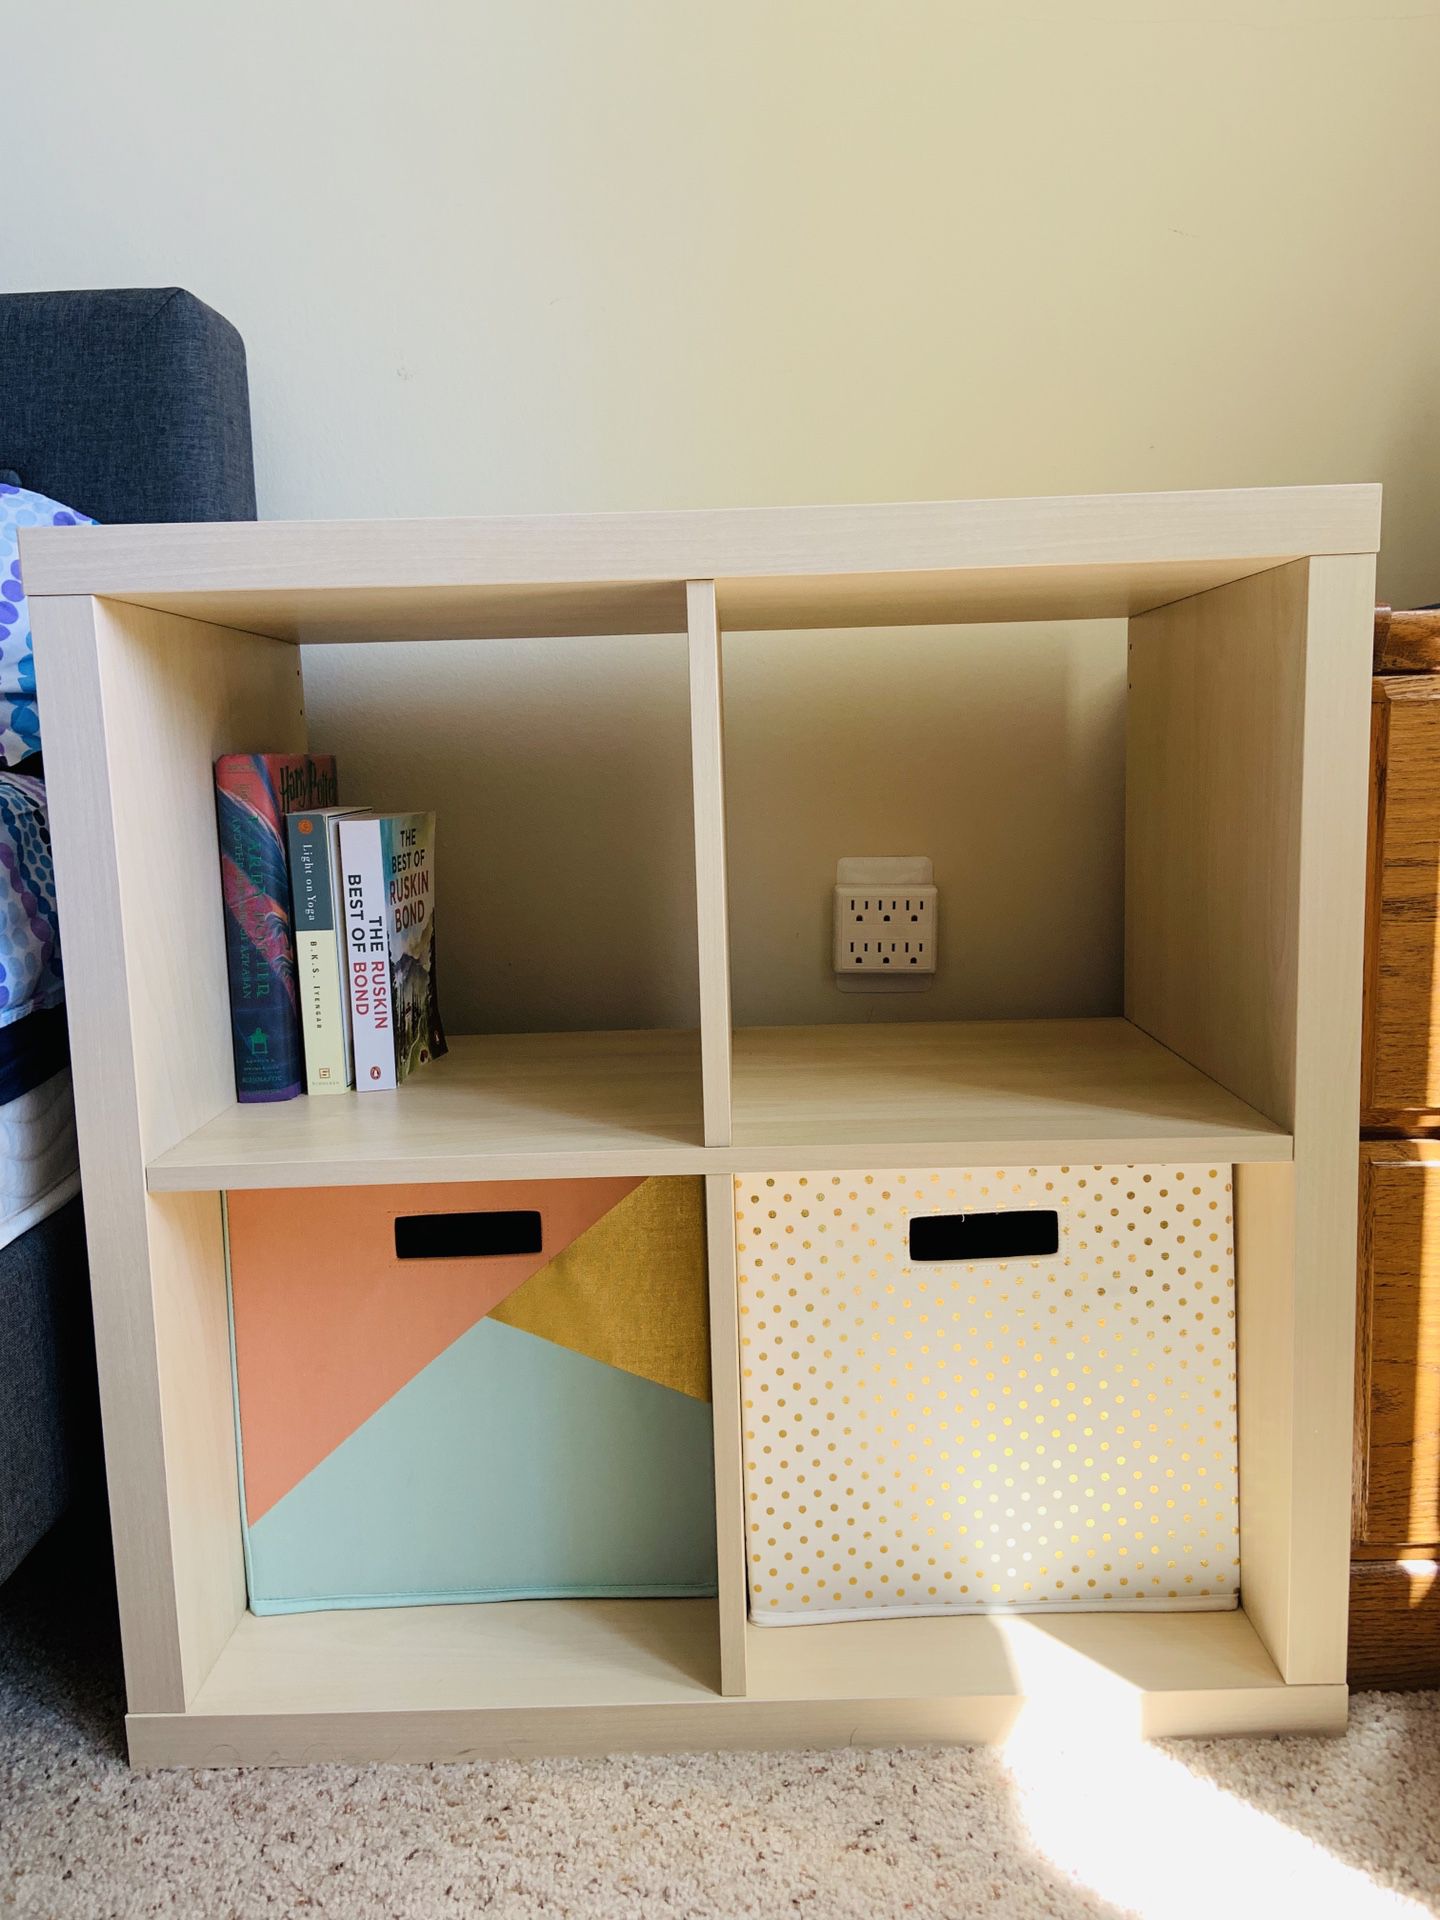 IKEA kallax bookshelf/ storage shelf